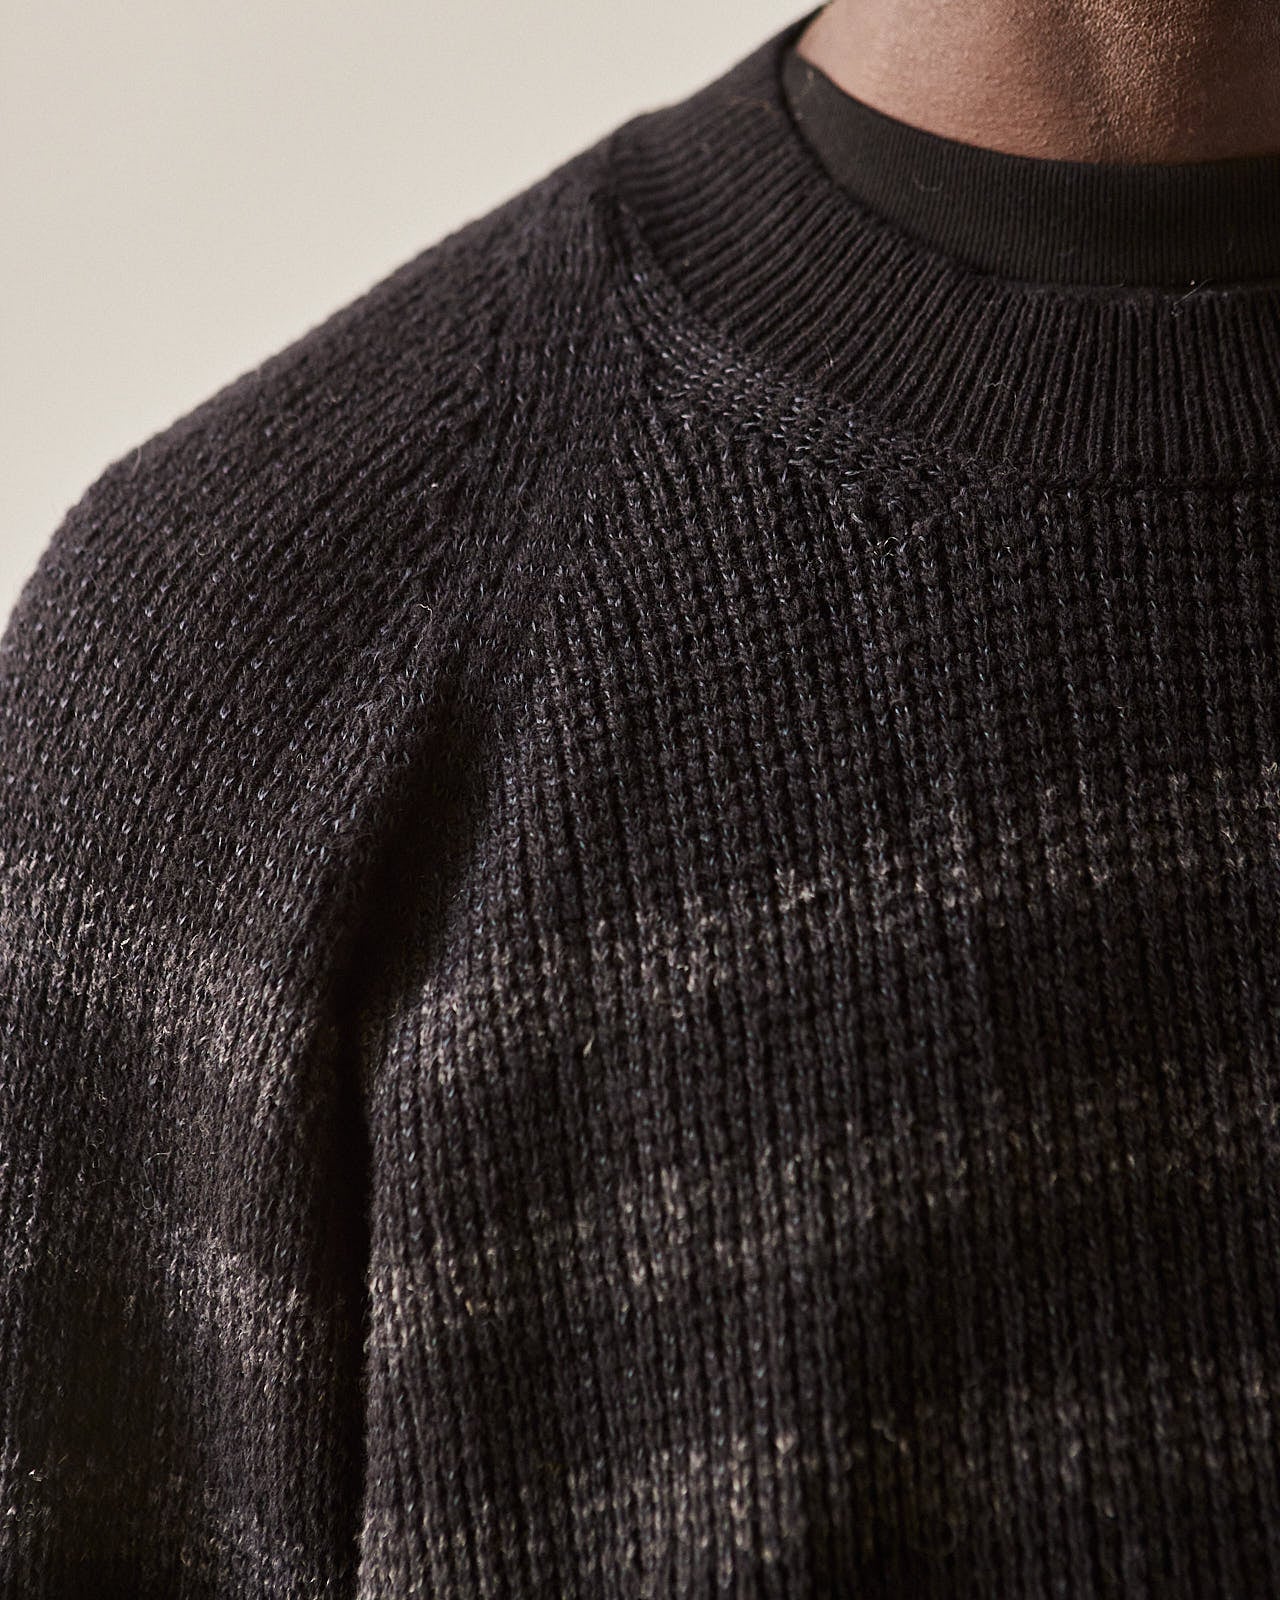 Jan-Jan Van Essche Knit #56, Black Stripe